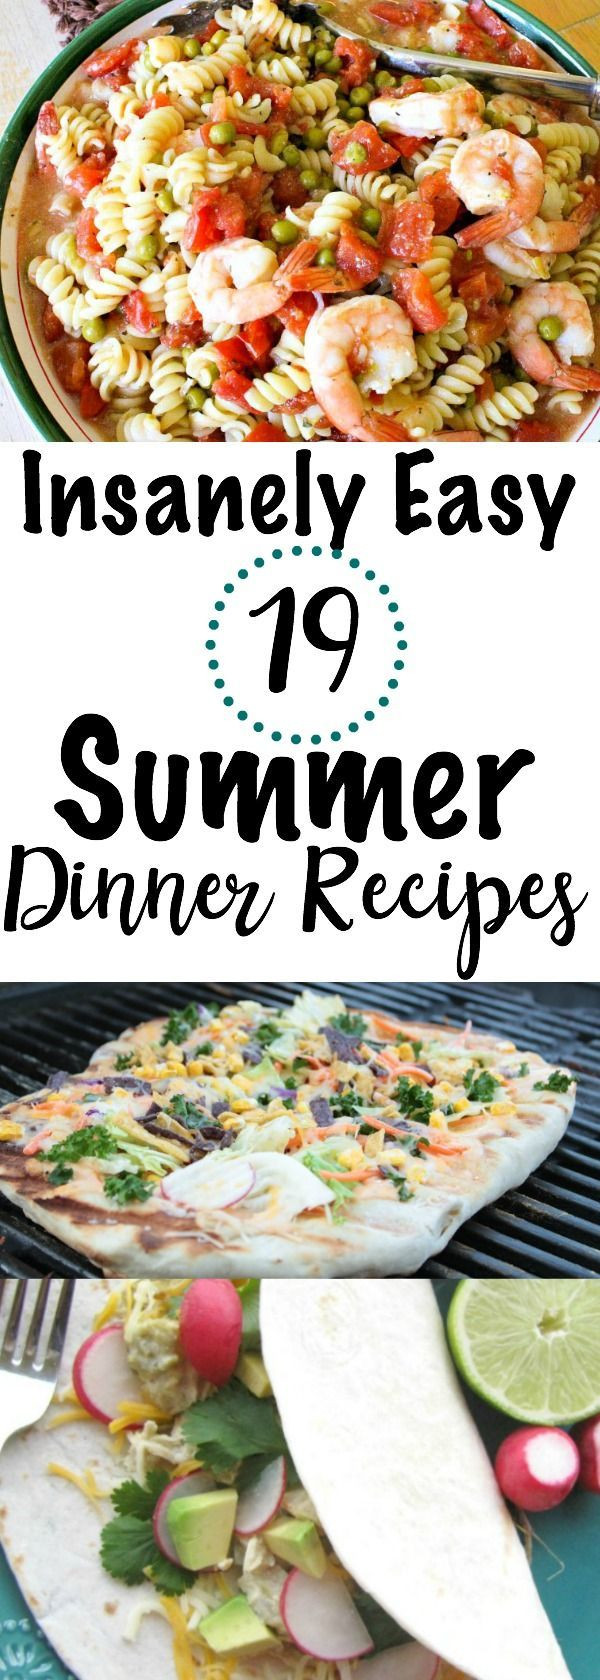 Easy Summer Dinner Recipes
 19 Insanely Easy Summer Dinner Recipes